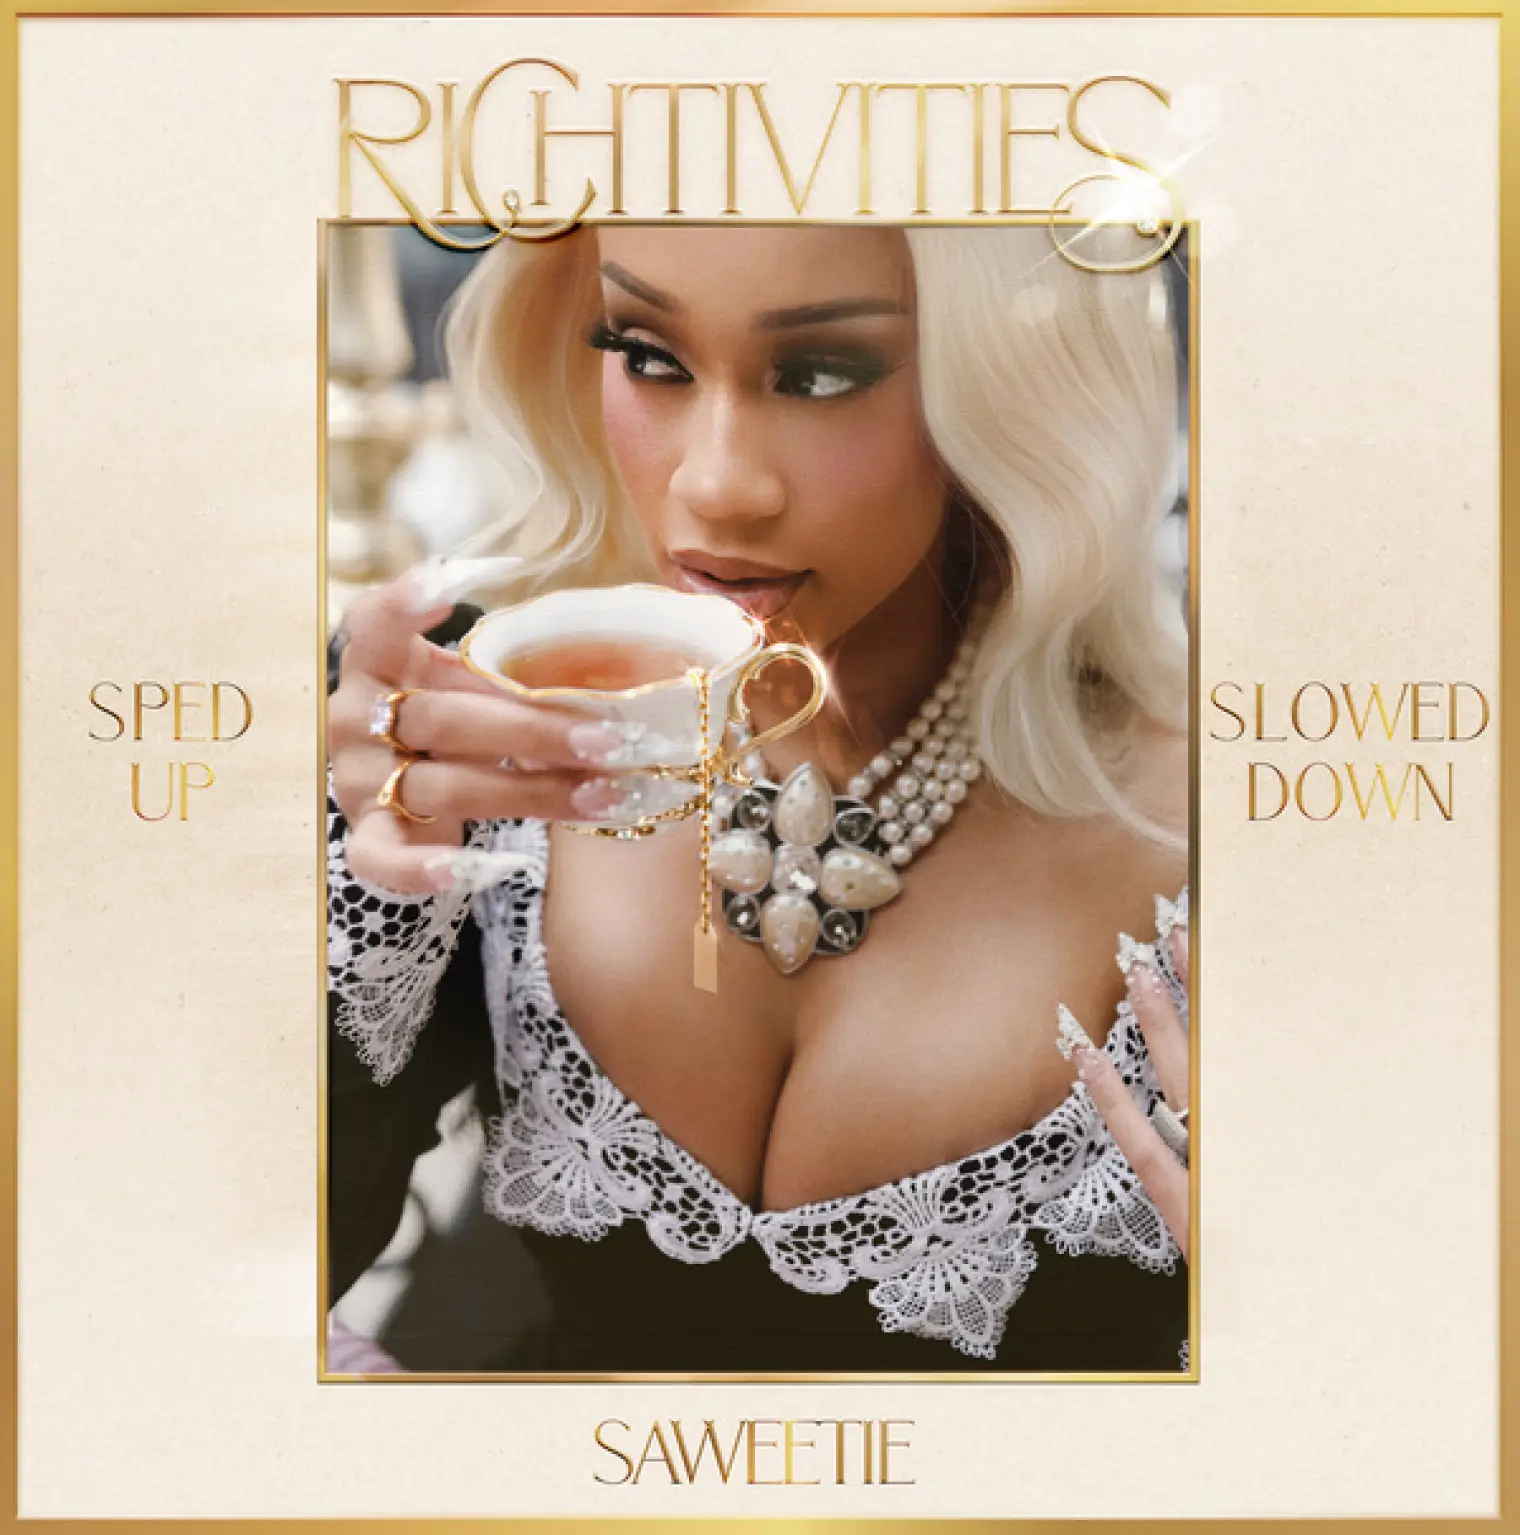 Richtivities (Sped Up/Slowed Down) -  Saweetie 